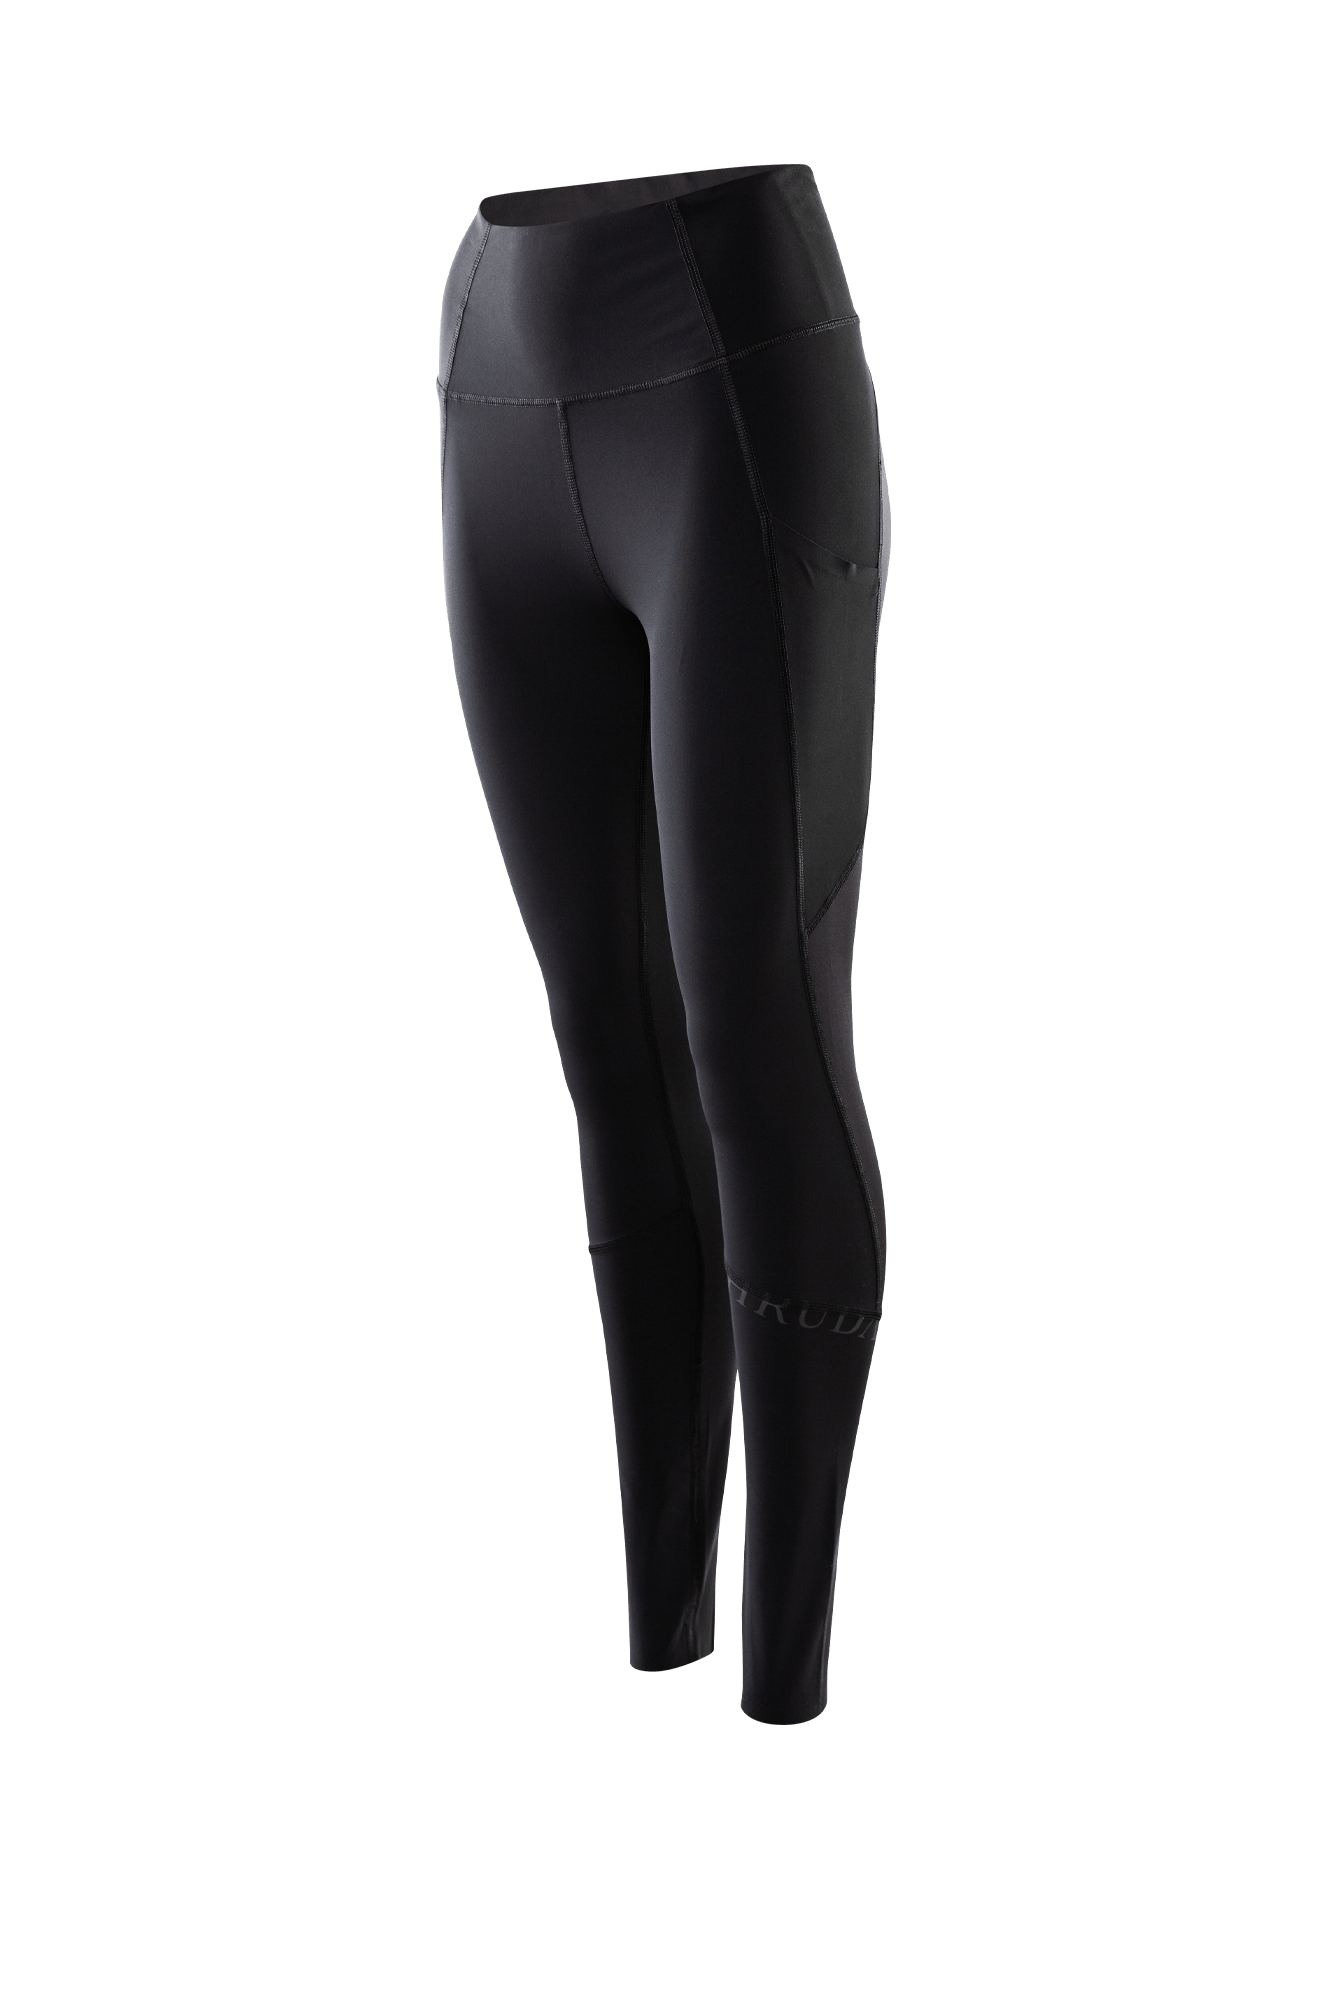 Victoria Sport Black Reflective Leggings